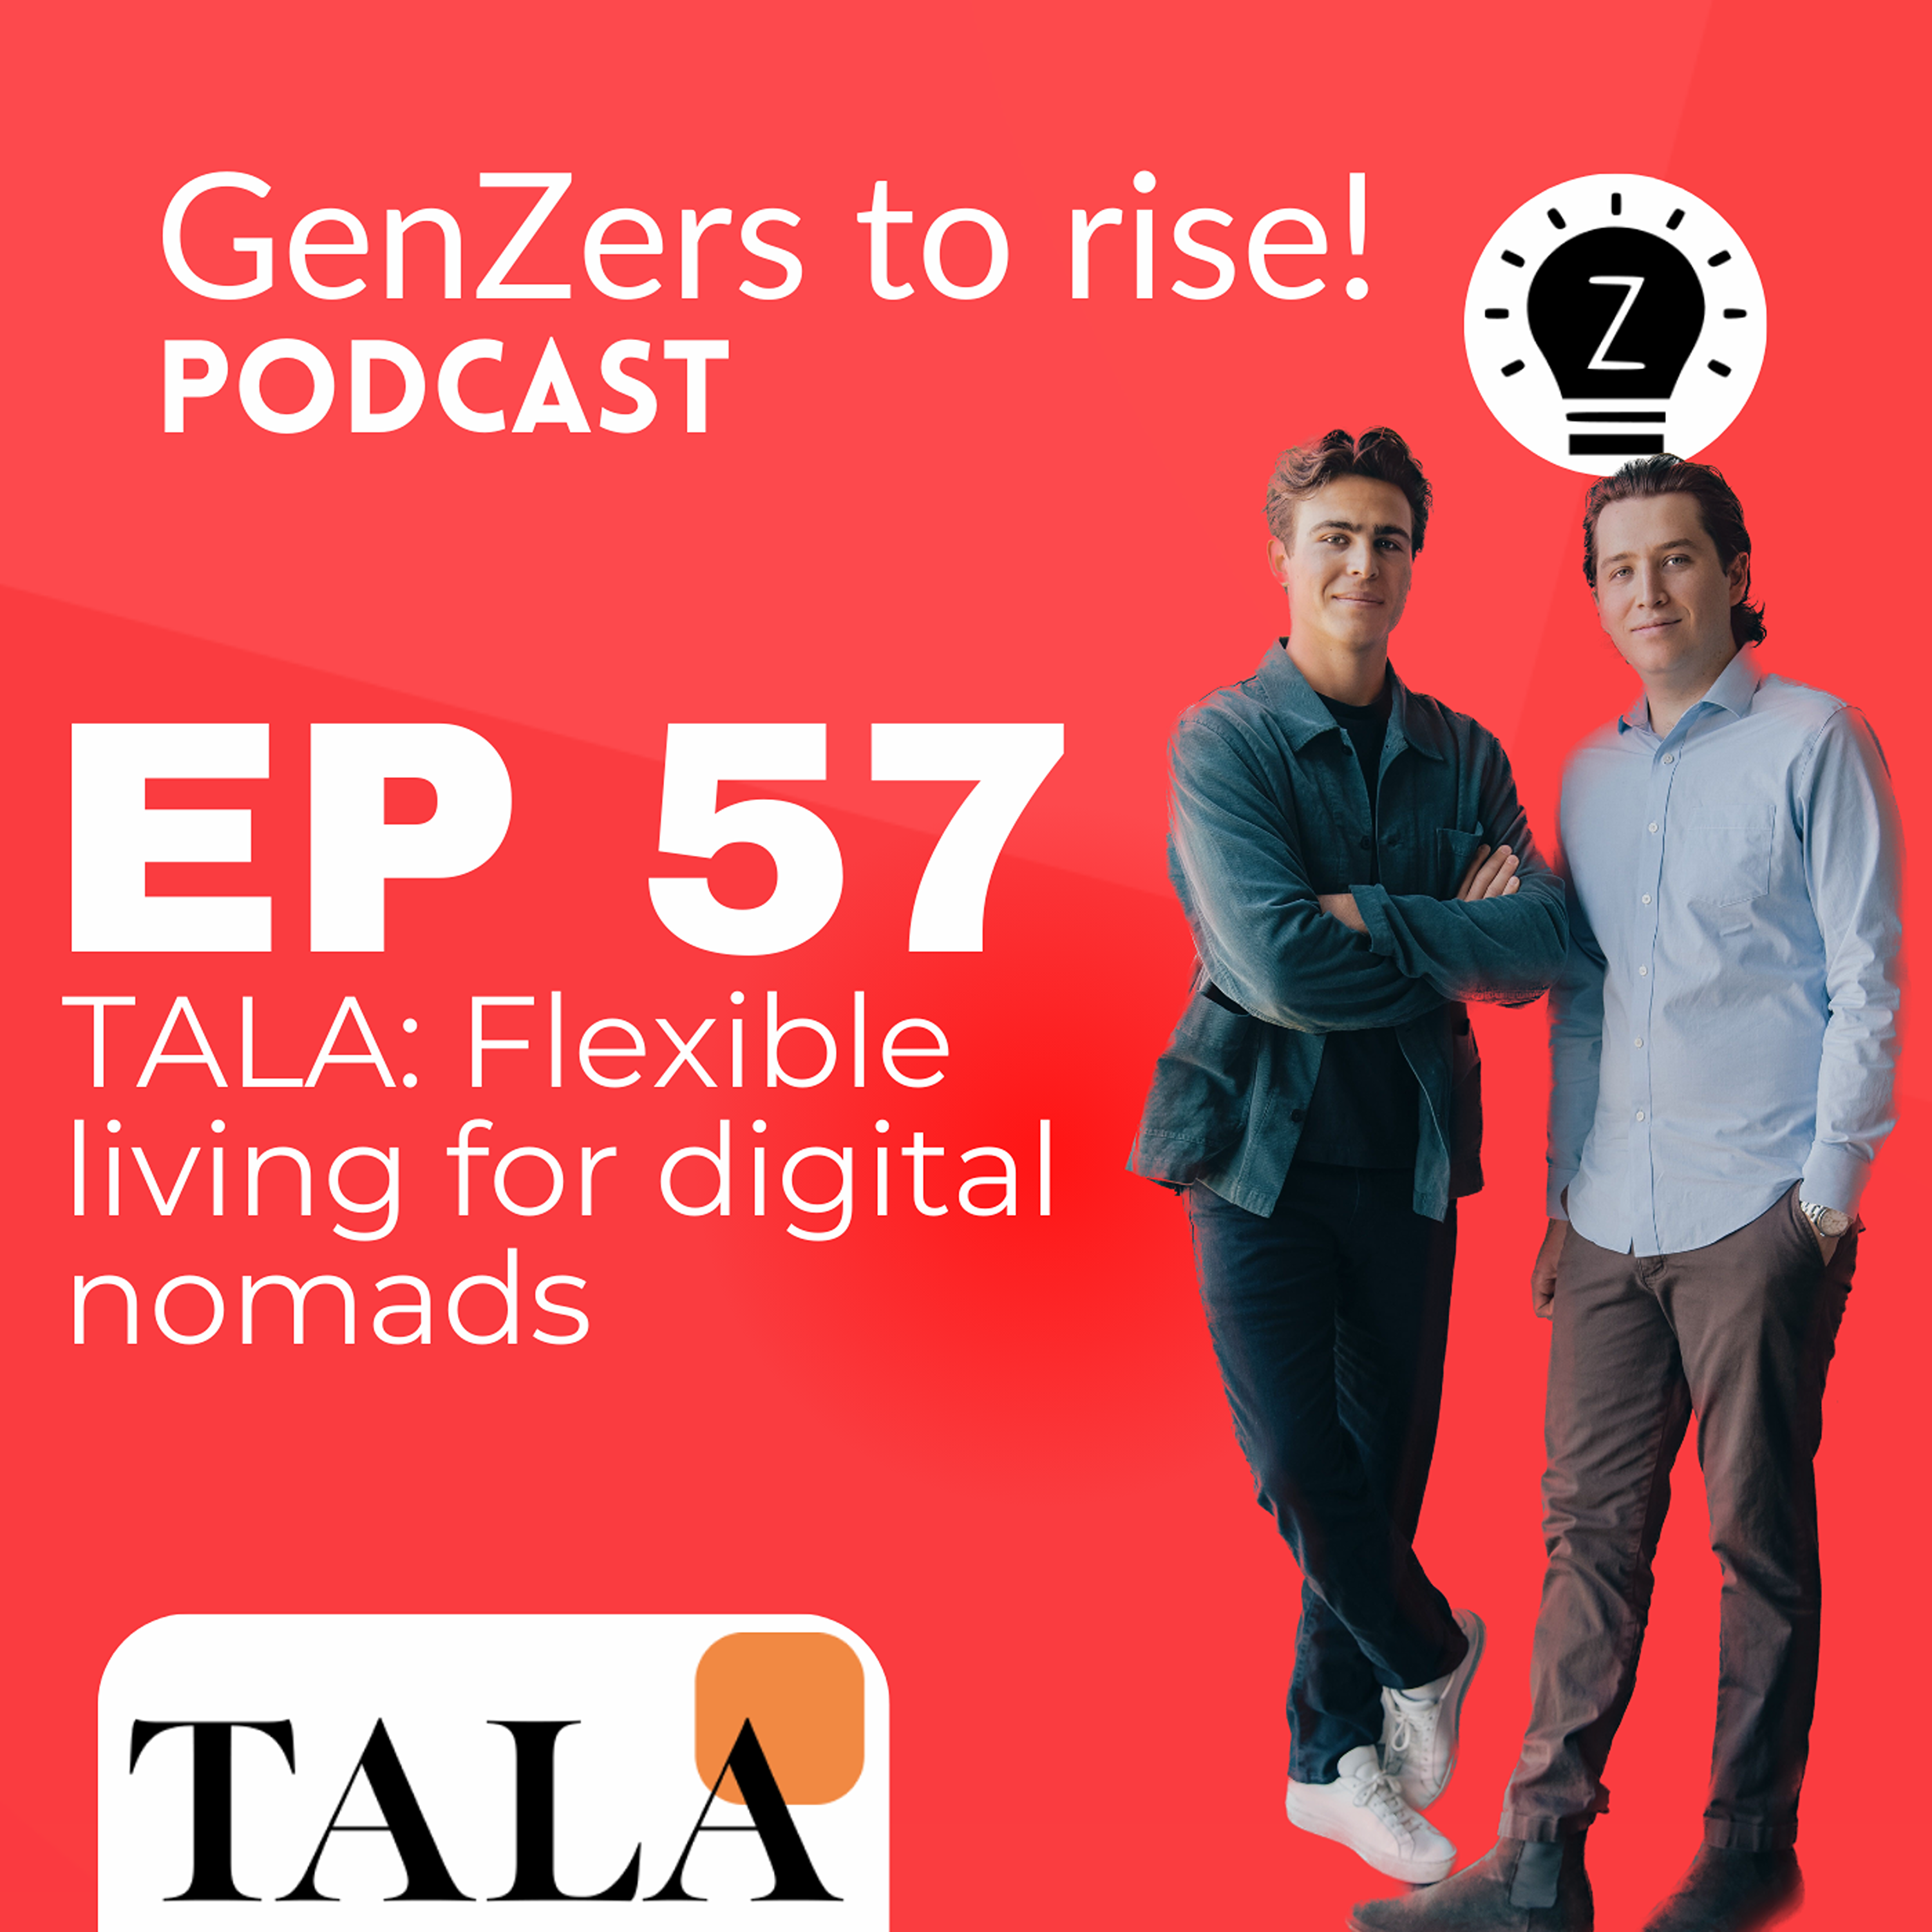 TALA: Flexible living for digital nomads